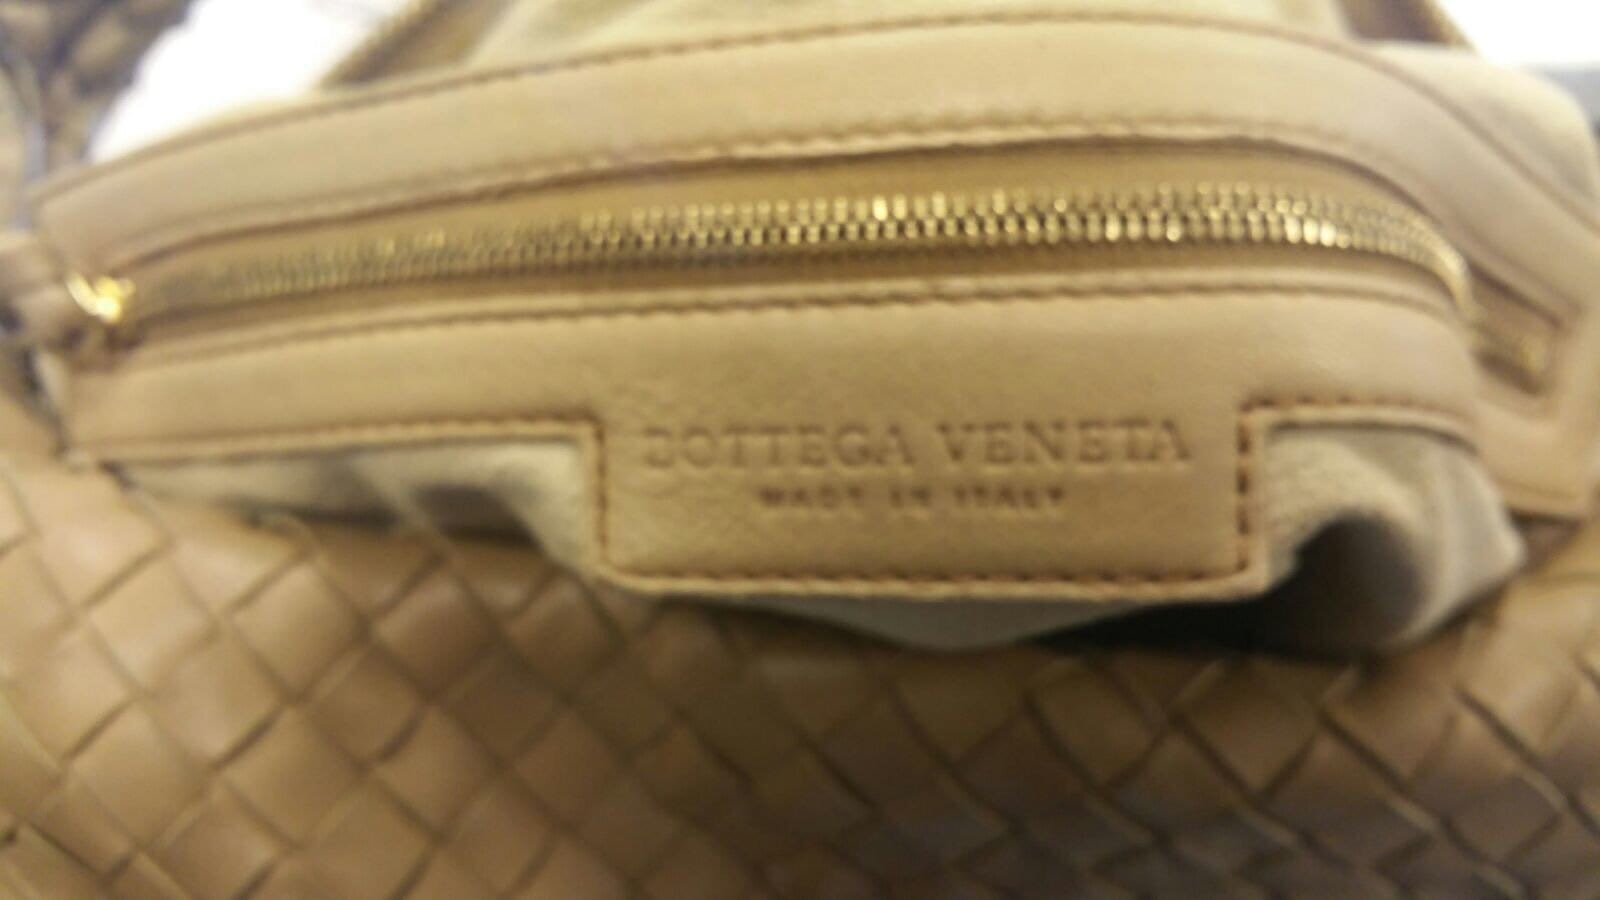 Bottega Veneta Authenticated Leather Bracelet